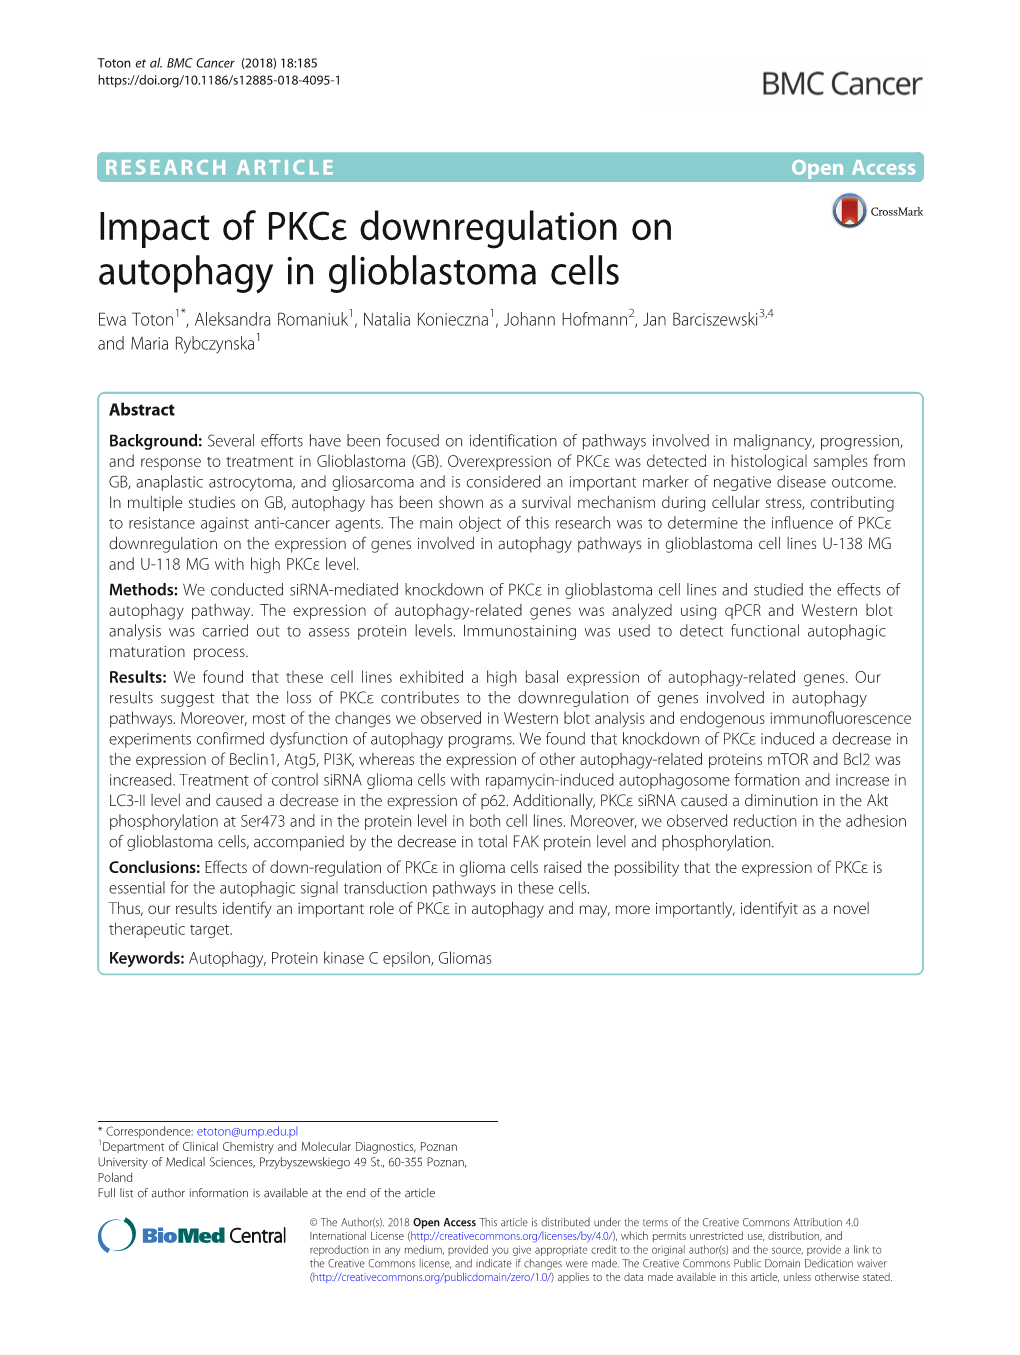 Impact of Pkcε Downregulation on Autophagy in Glioblastoma Cells